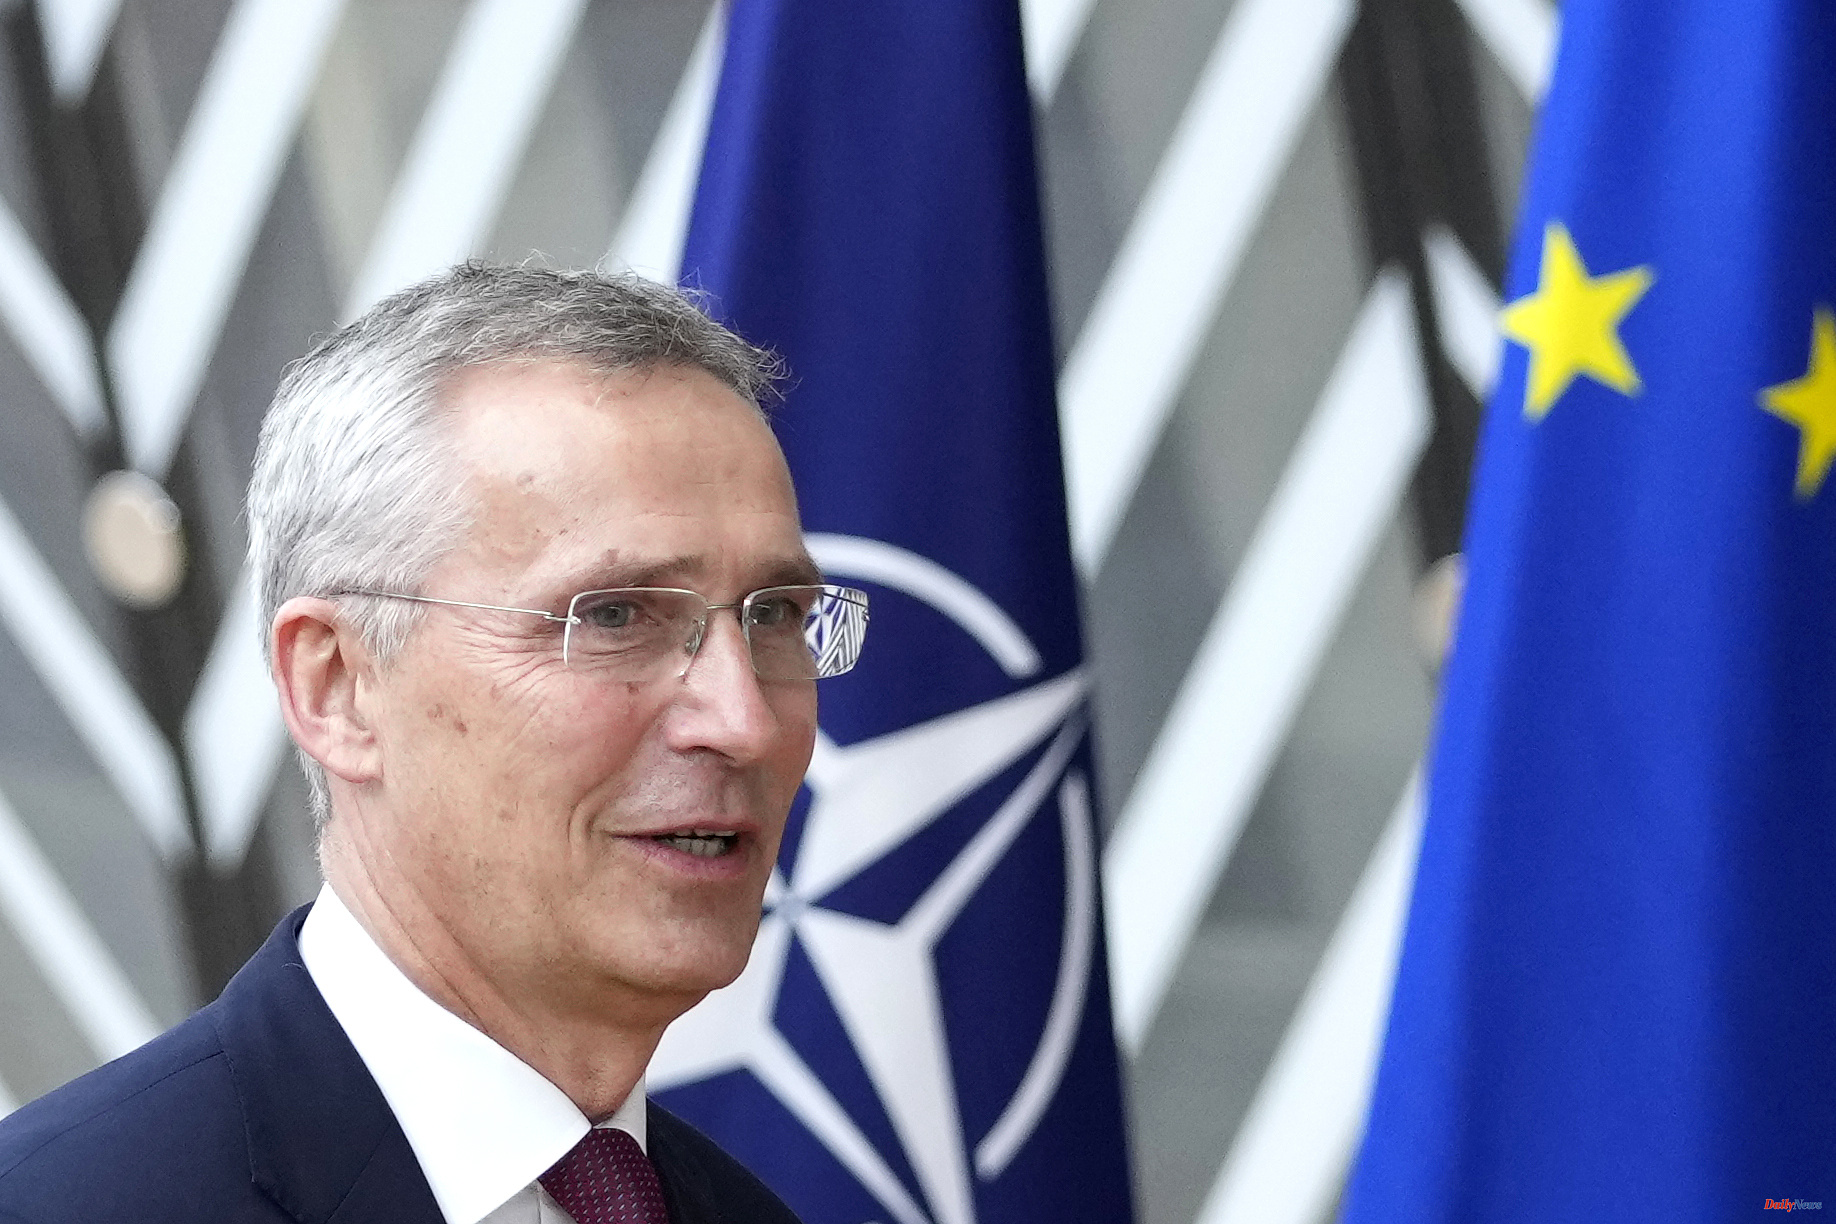 War in Europe The war in Ukraine will be long, warns NATO chief